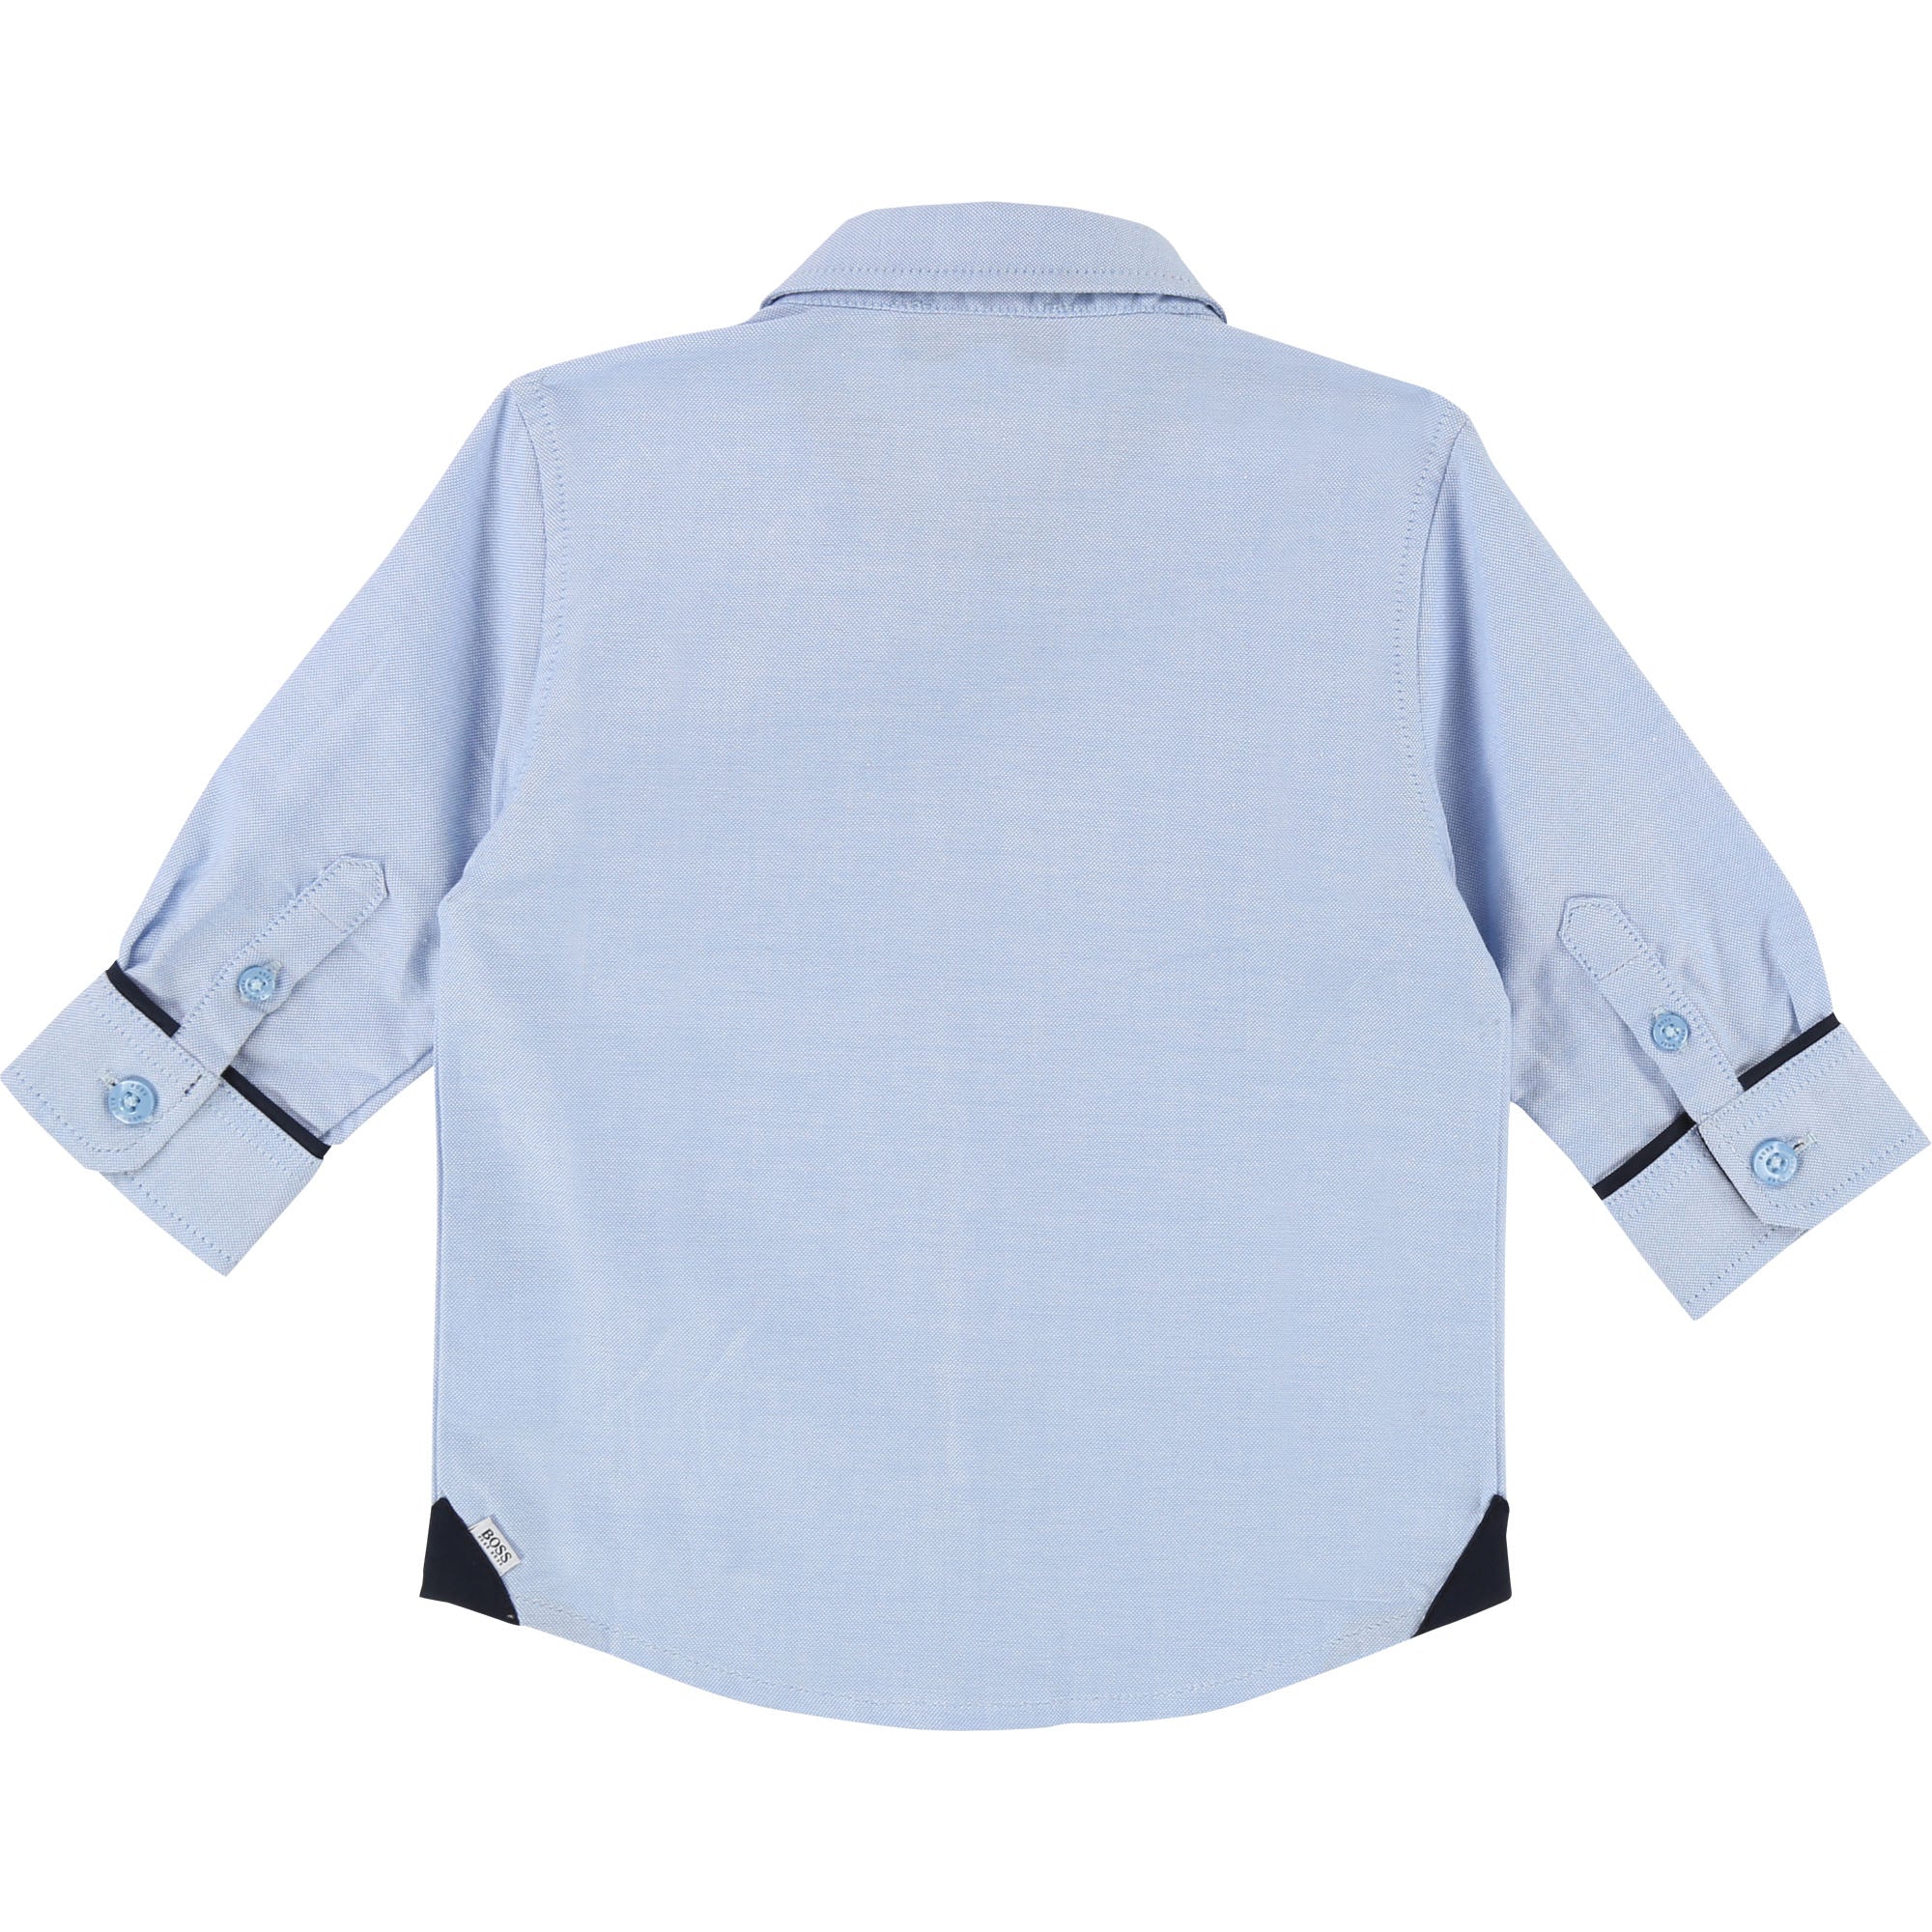 Baby Boys Light Blue Cotton Shirt